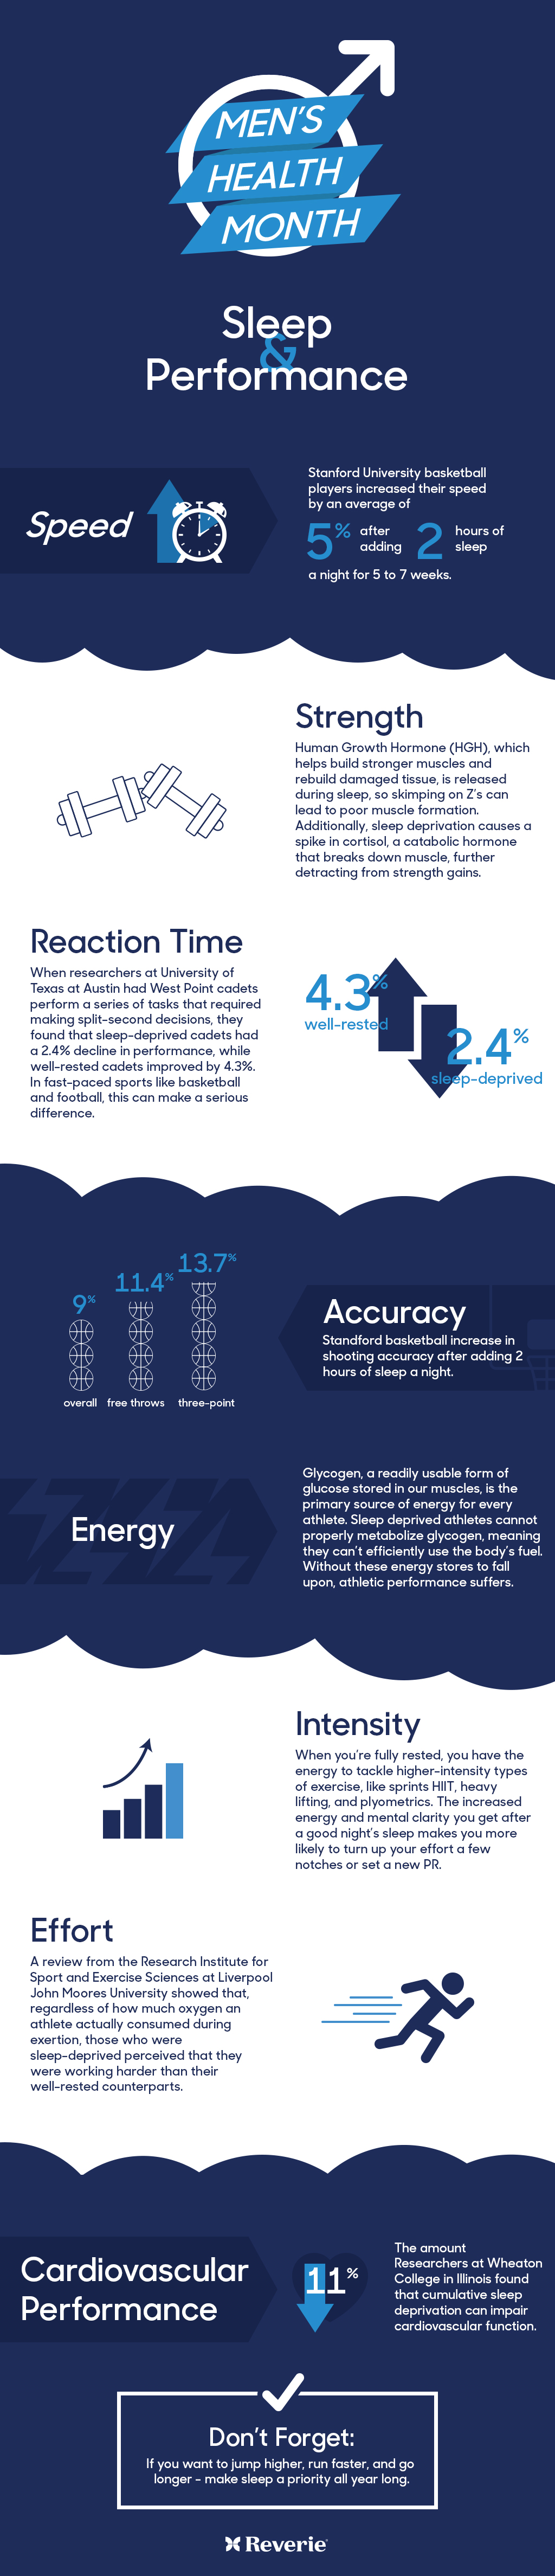 Sleep and Performance infographic